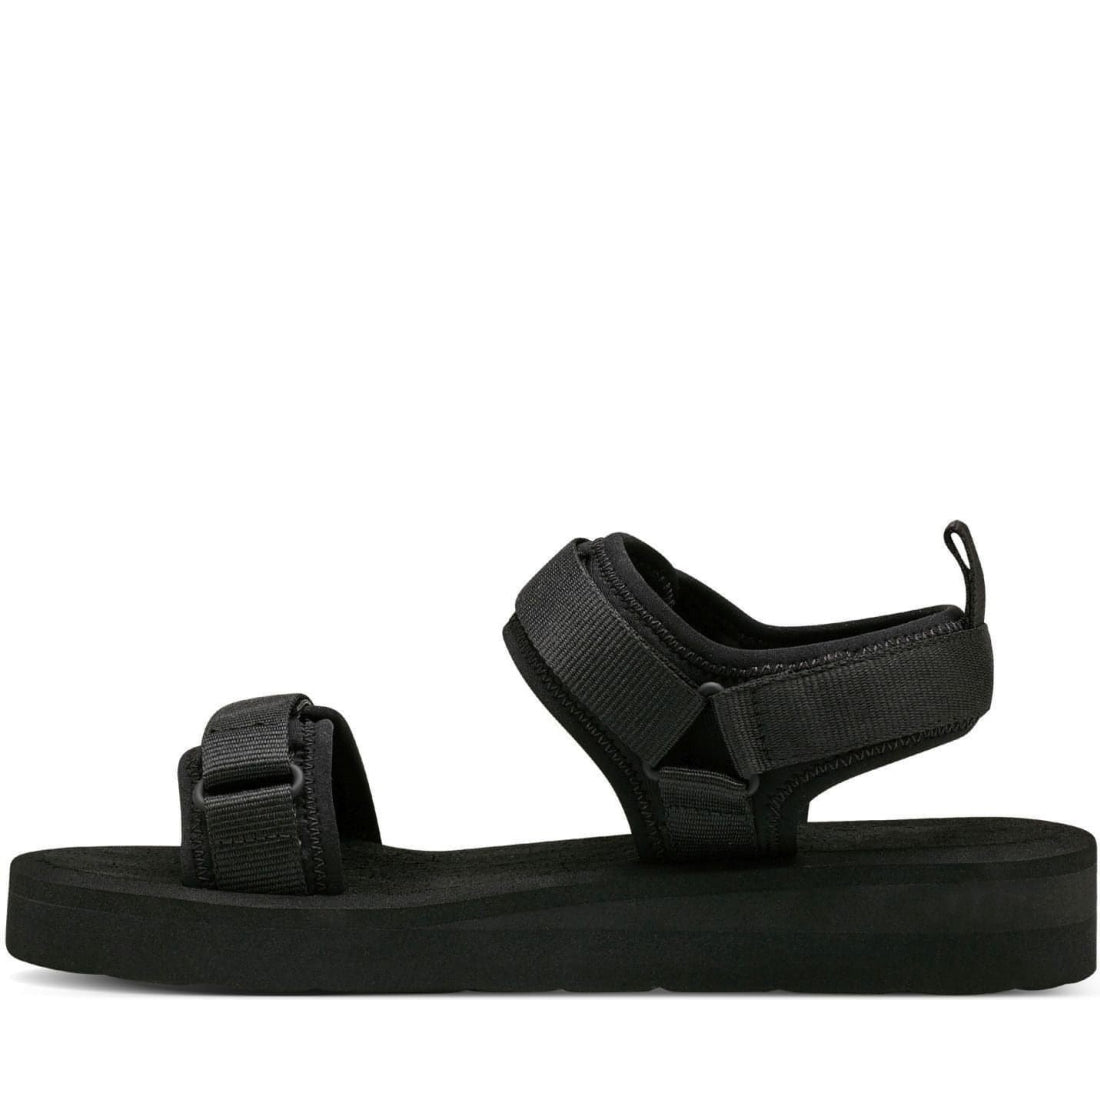 Tamaris womens black casual open sandals | Vilbury London